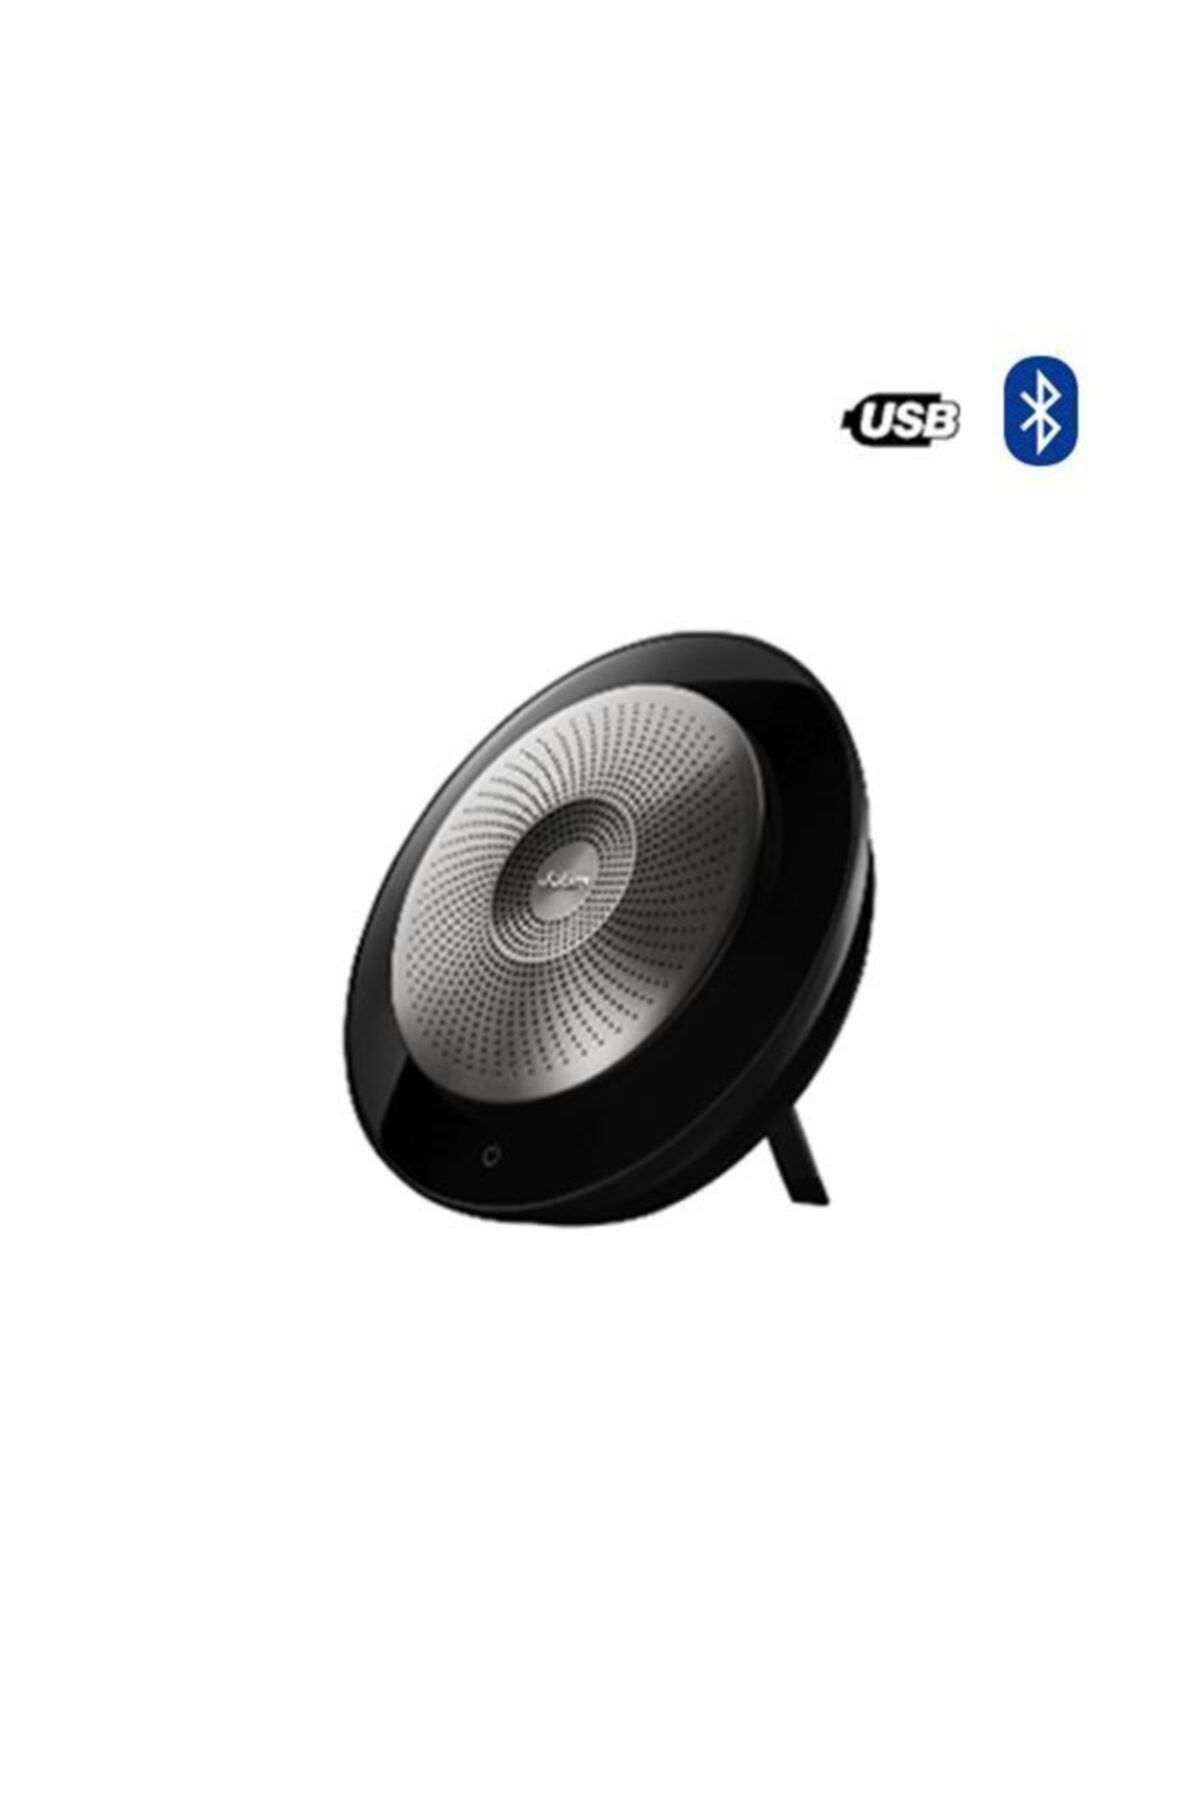 Jabra Speak 710 Wireless Bluetooth Speaker -spk 710-148fe